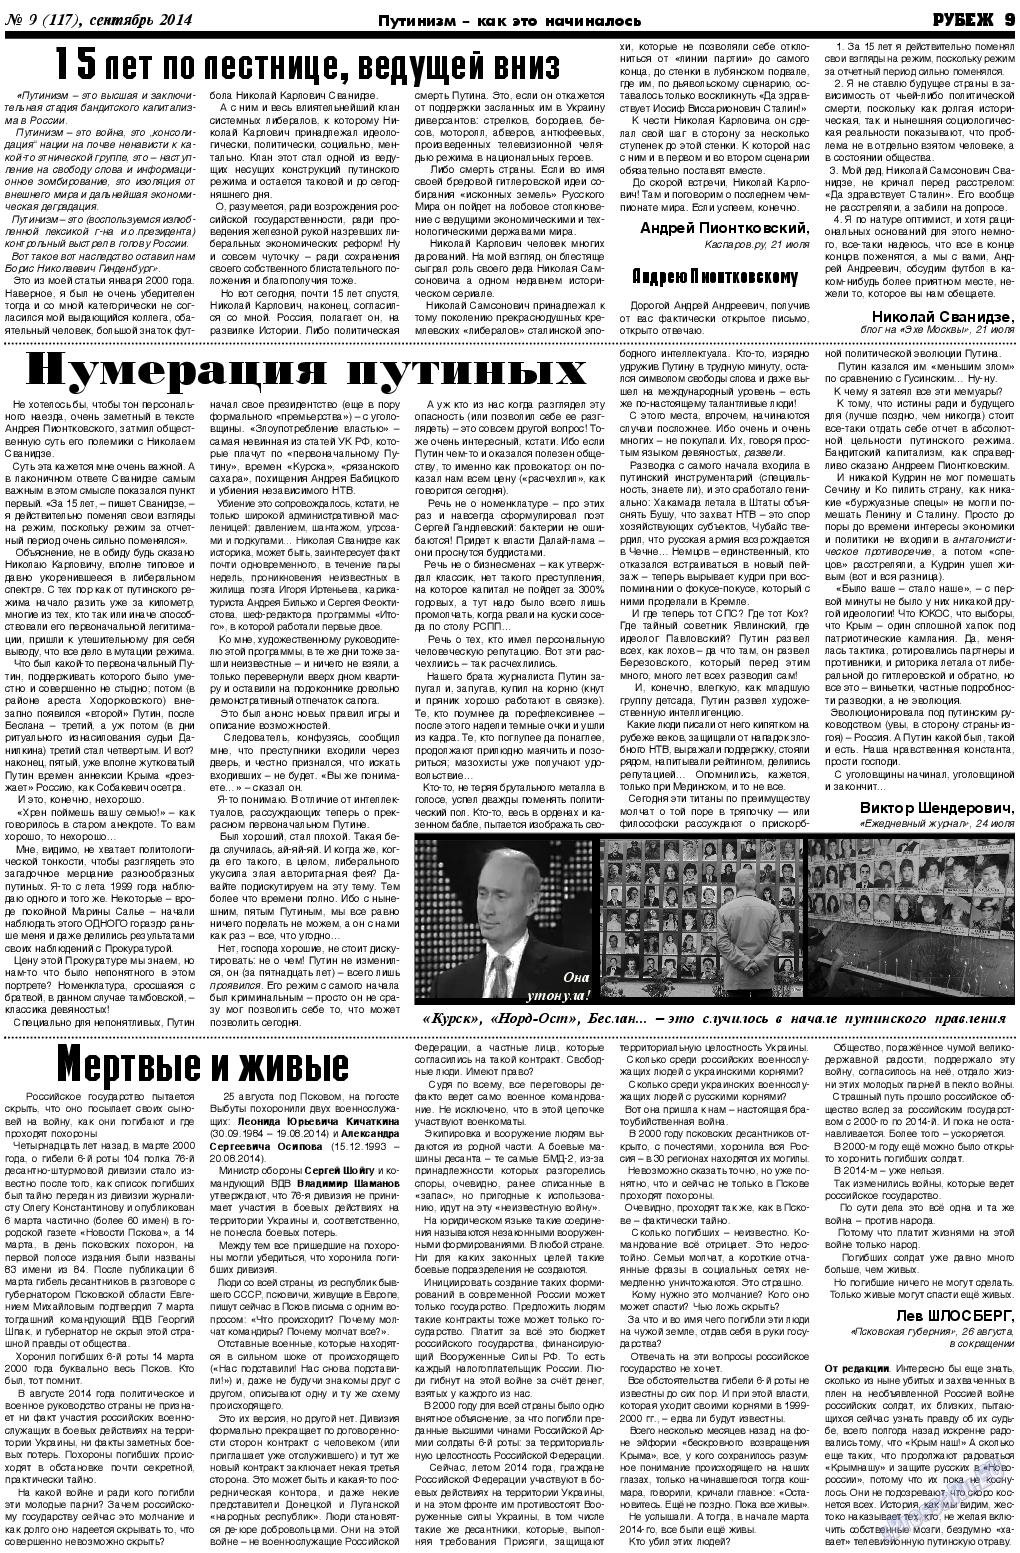 Рубеж, газета. 2014 №9 стр.9